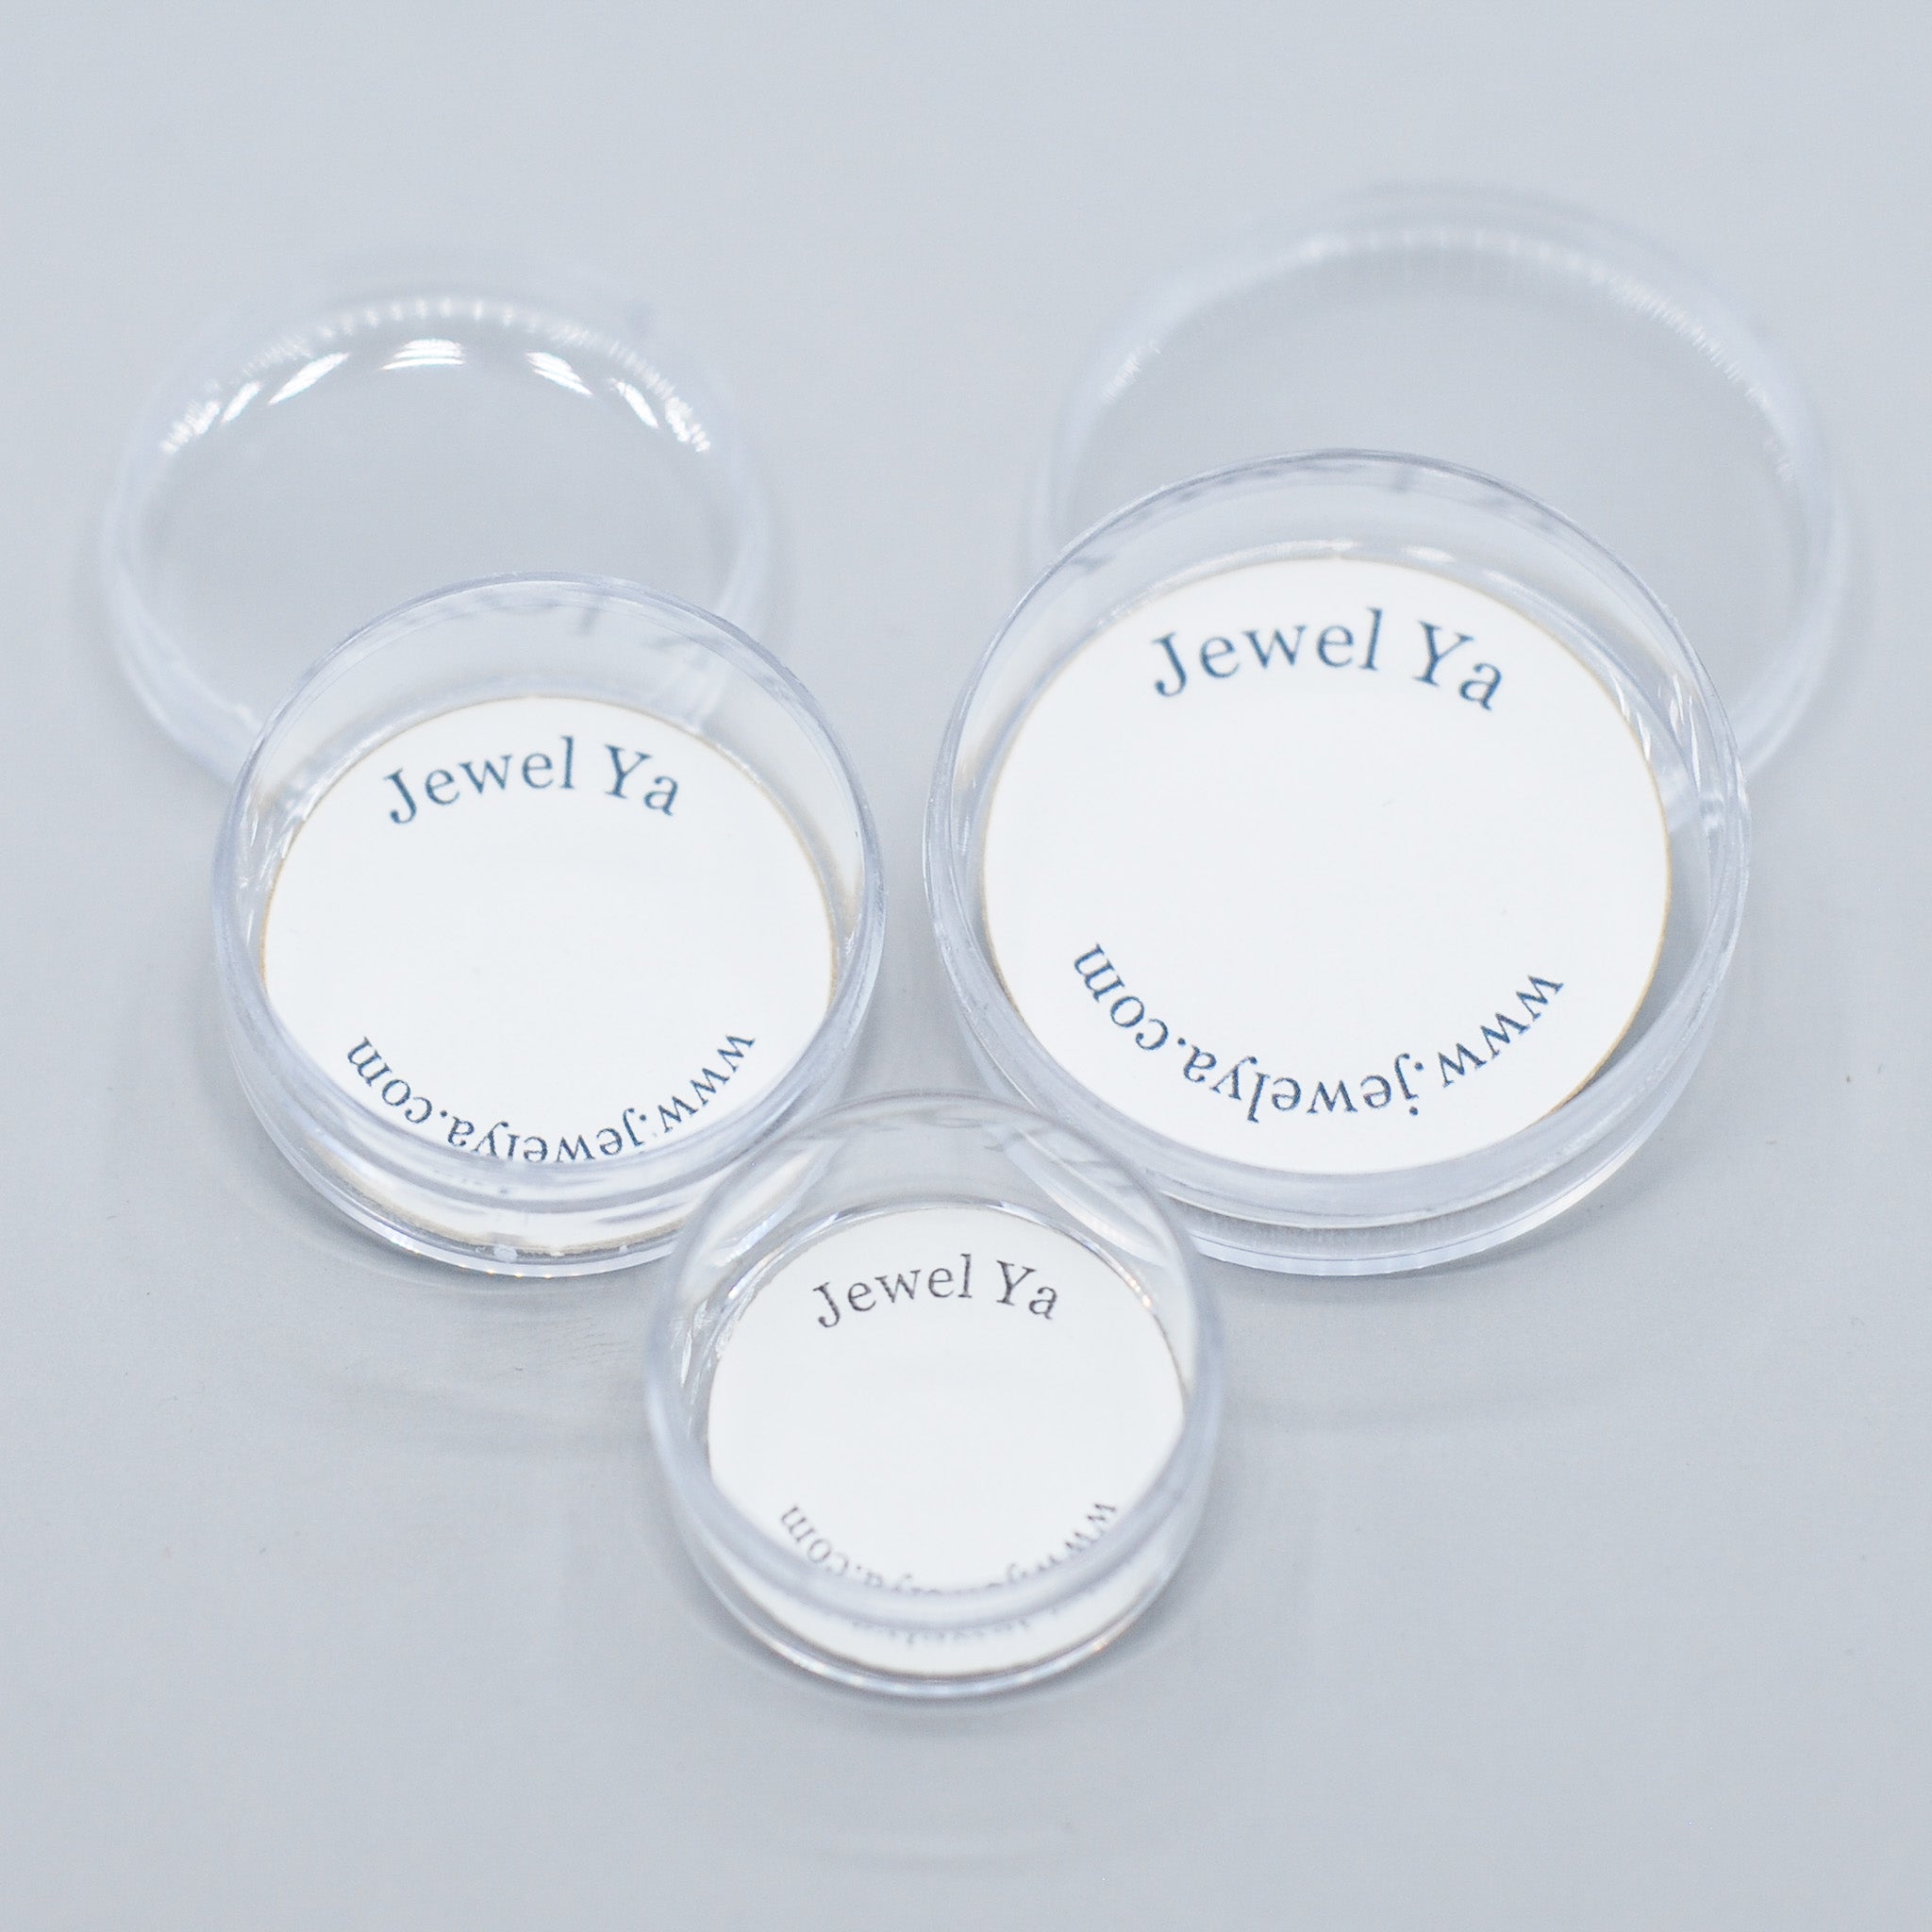 Personalized 3mm Beaded Lux Bracelet - Jewel Ya